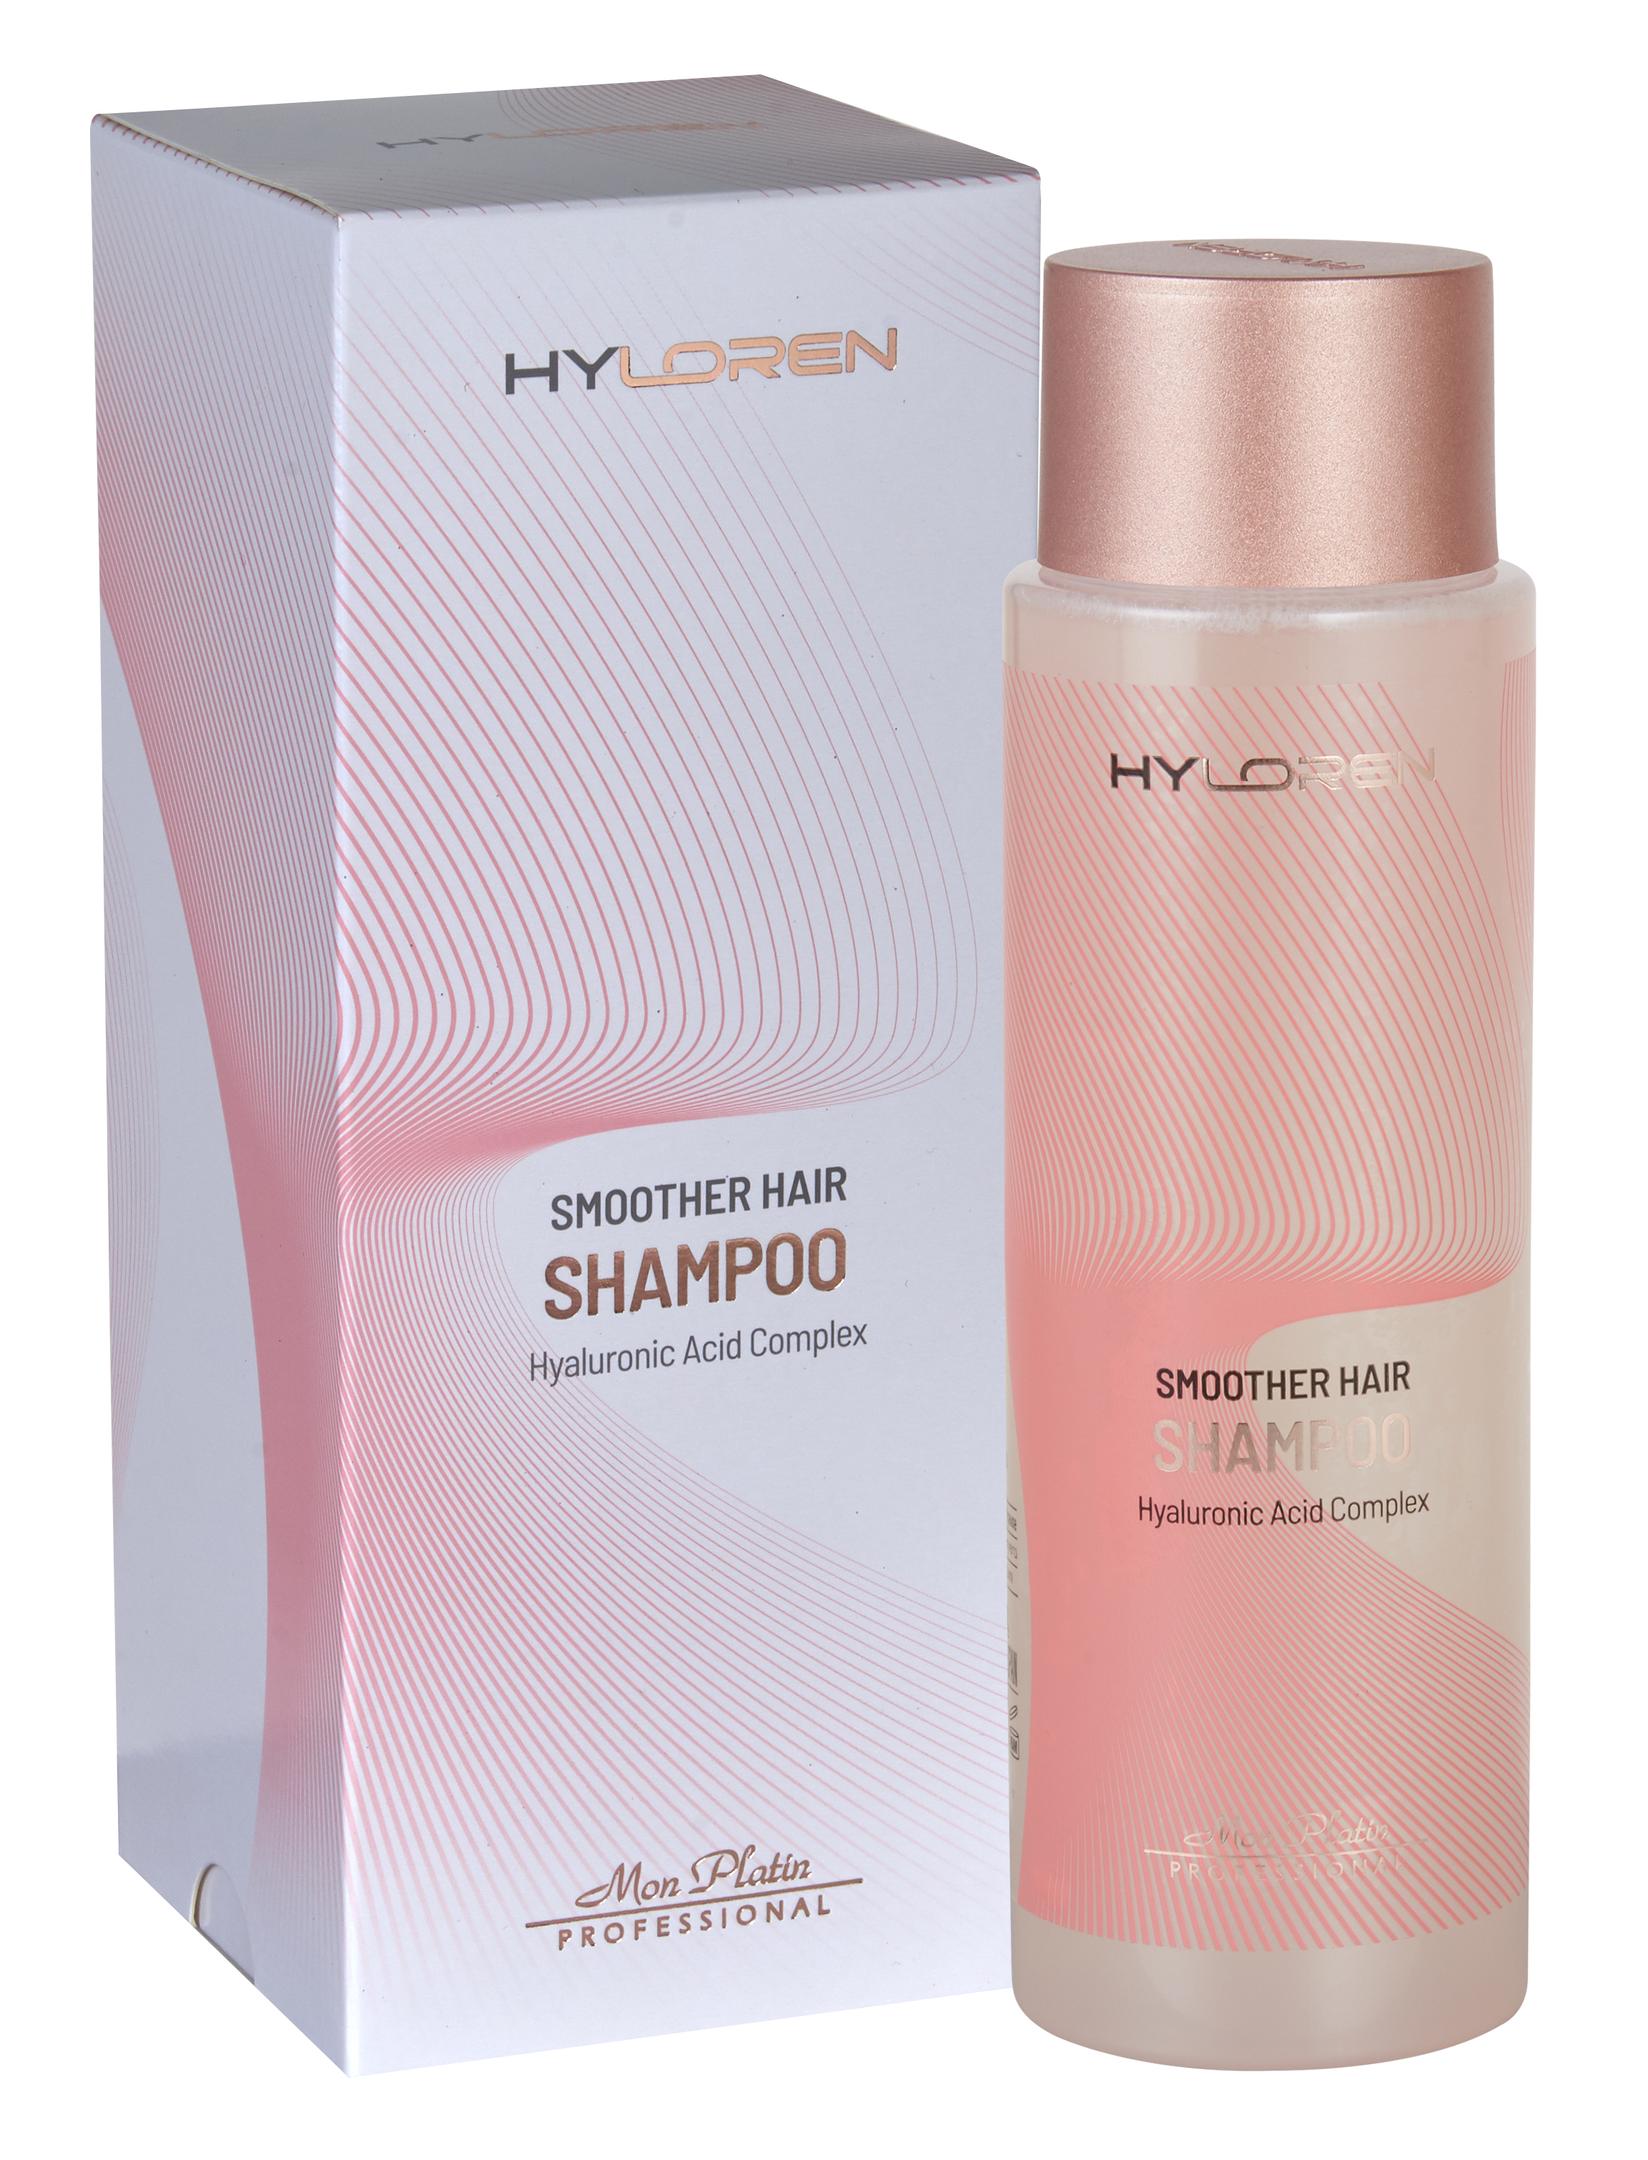 Selected image for MON PLATIN Šampon Hyloren Premium Hair Smoother 500ml